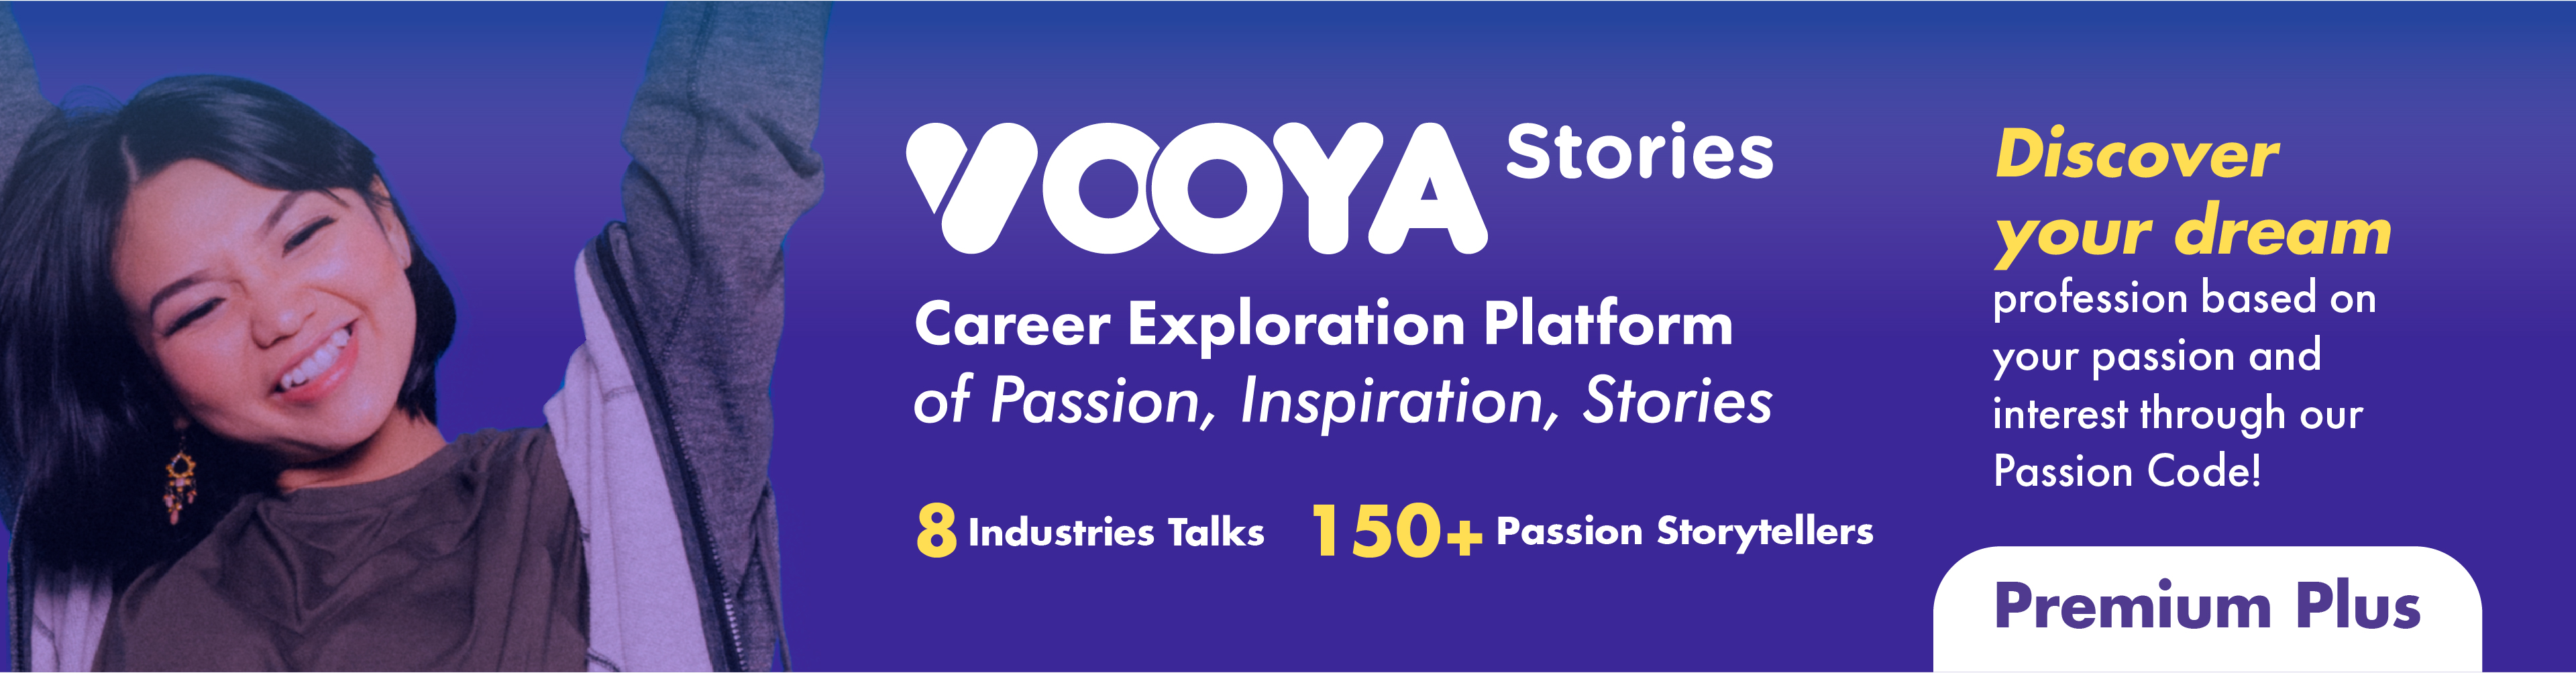 Vooya Stories - Premium Plus